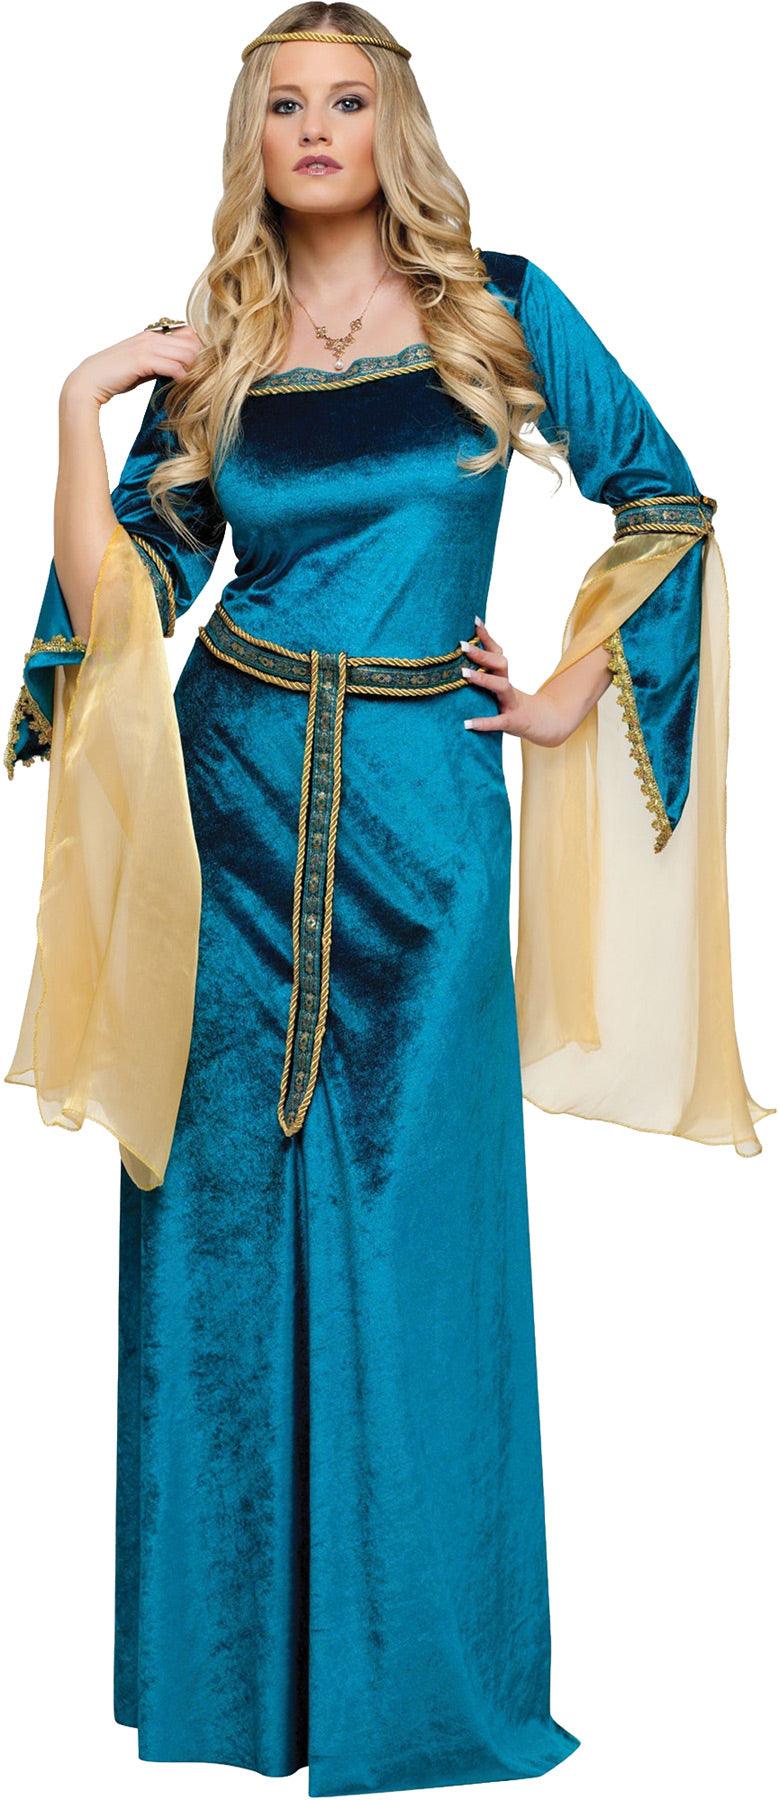 Adult Renaissance Princess Costume - McCabe's Costumes